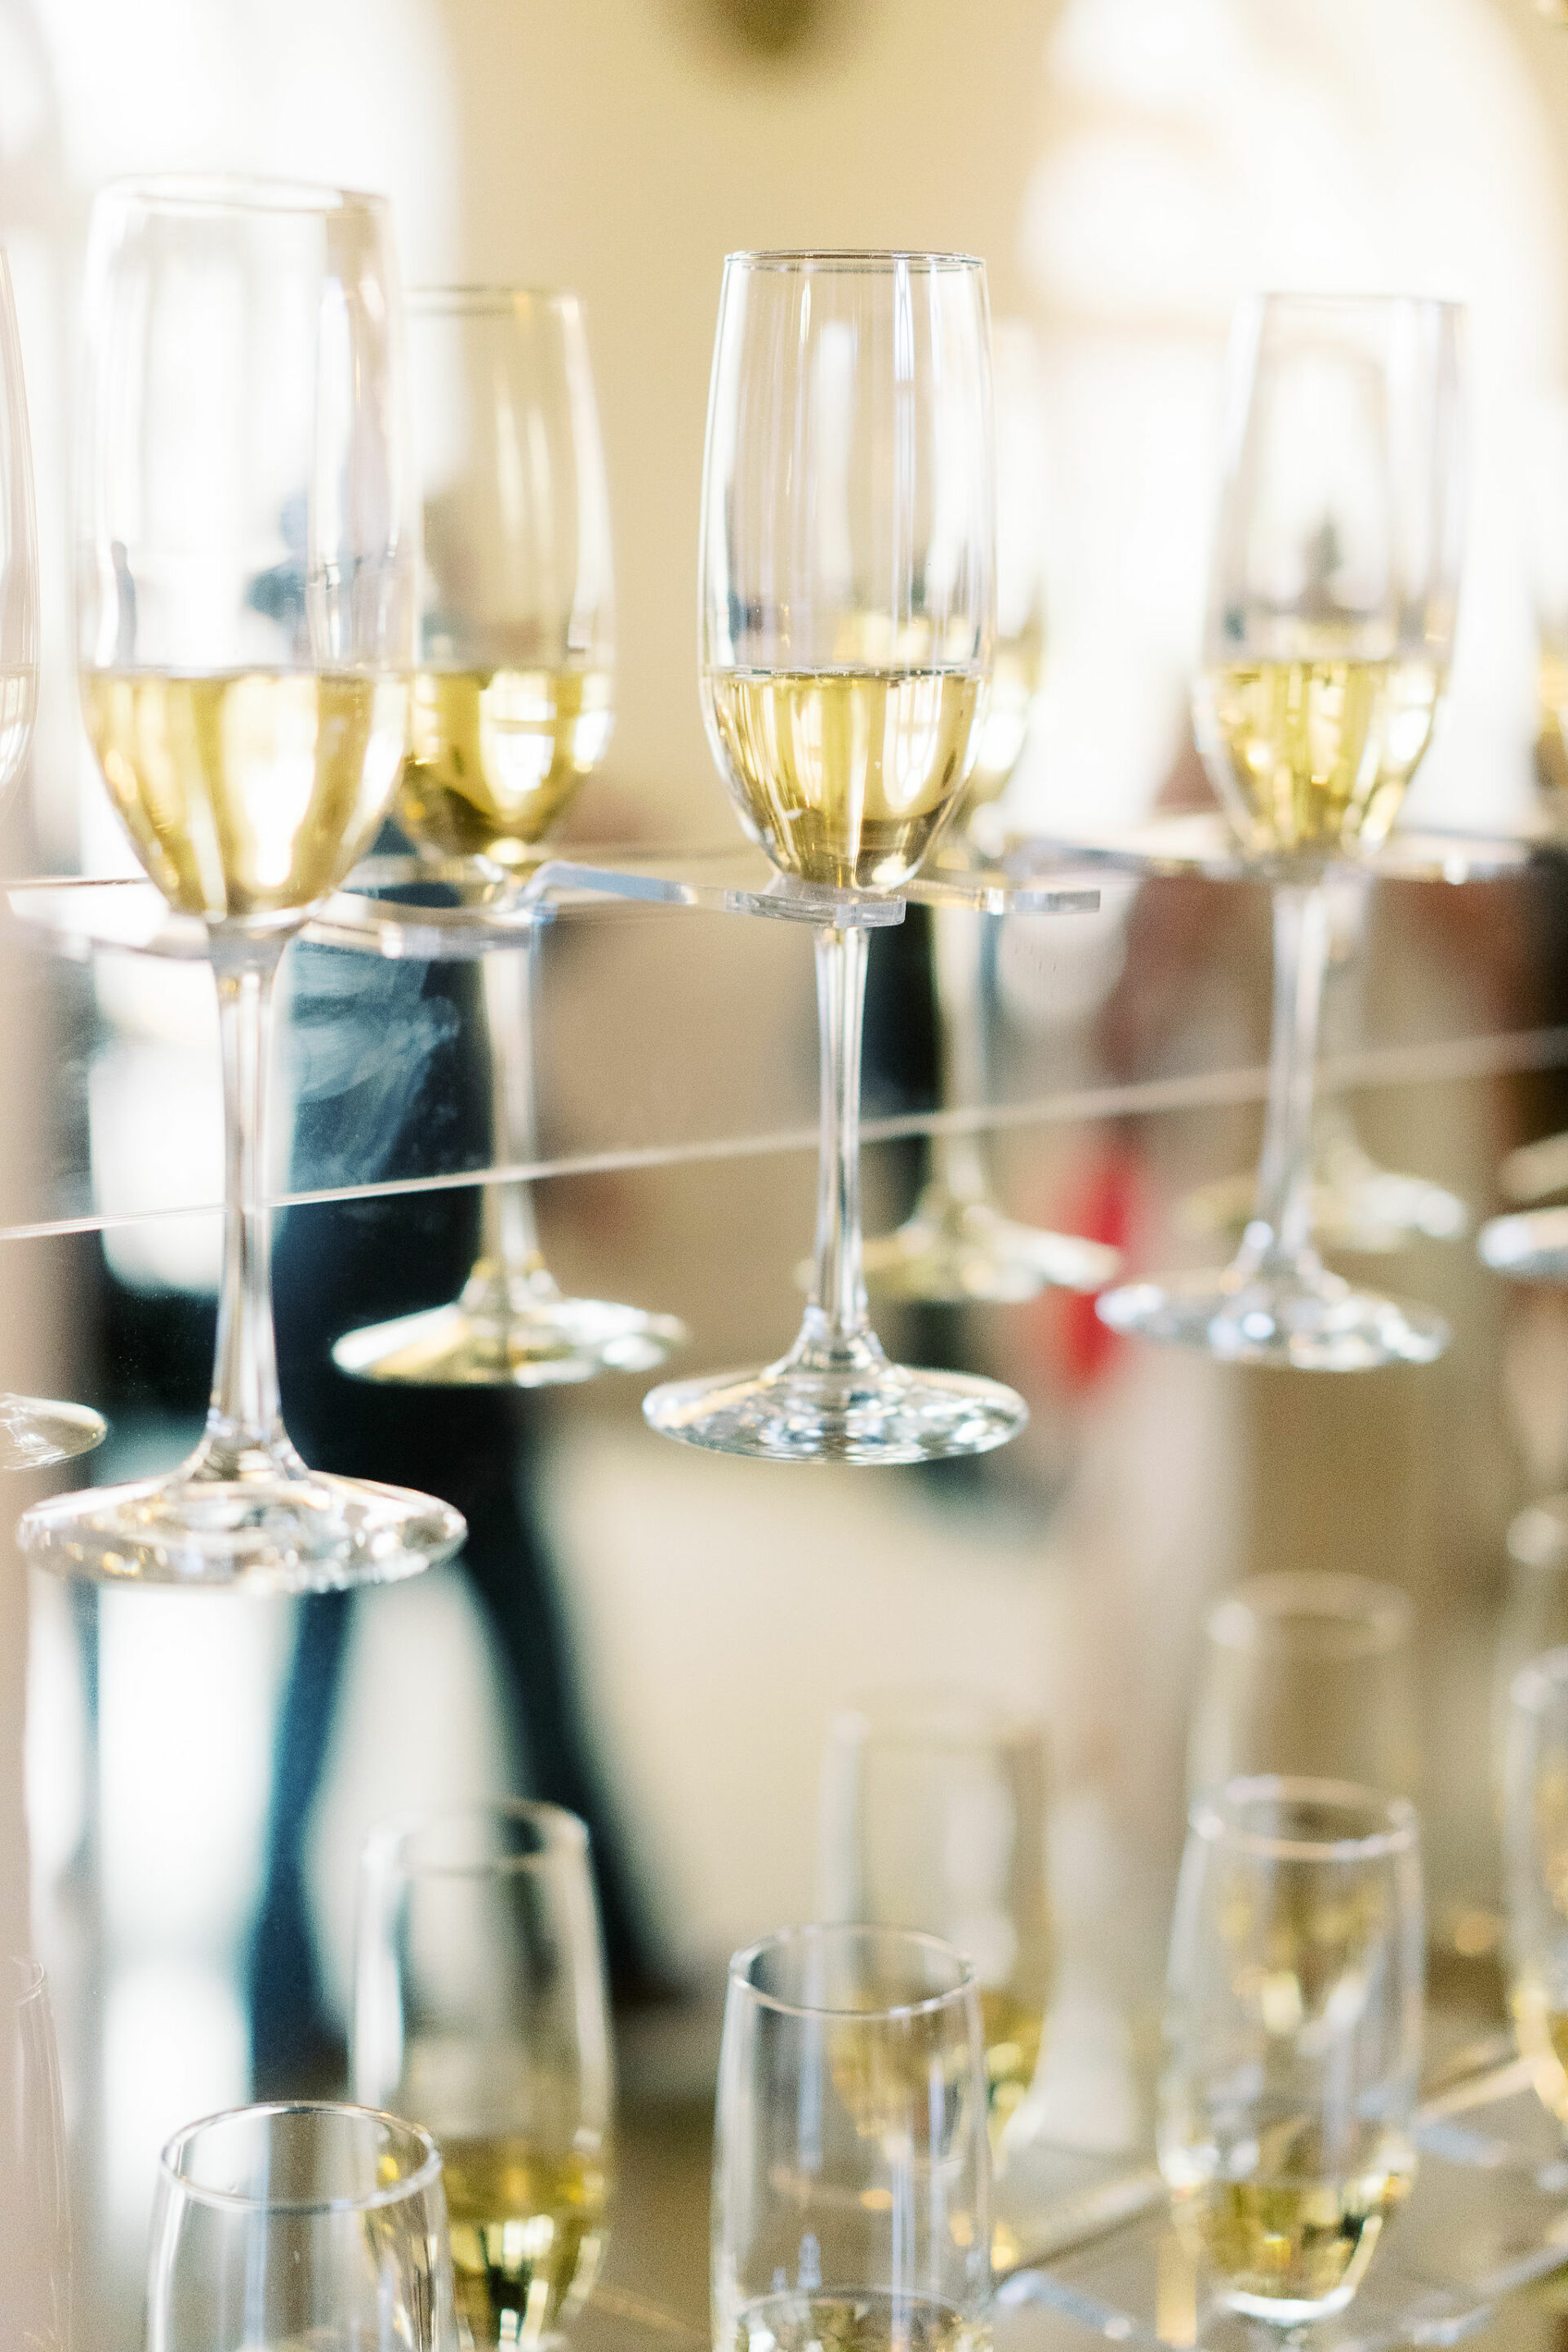 Champagne glasses in an elegant elevated holder